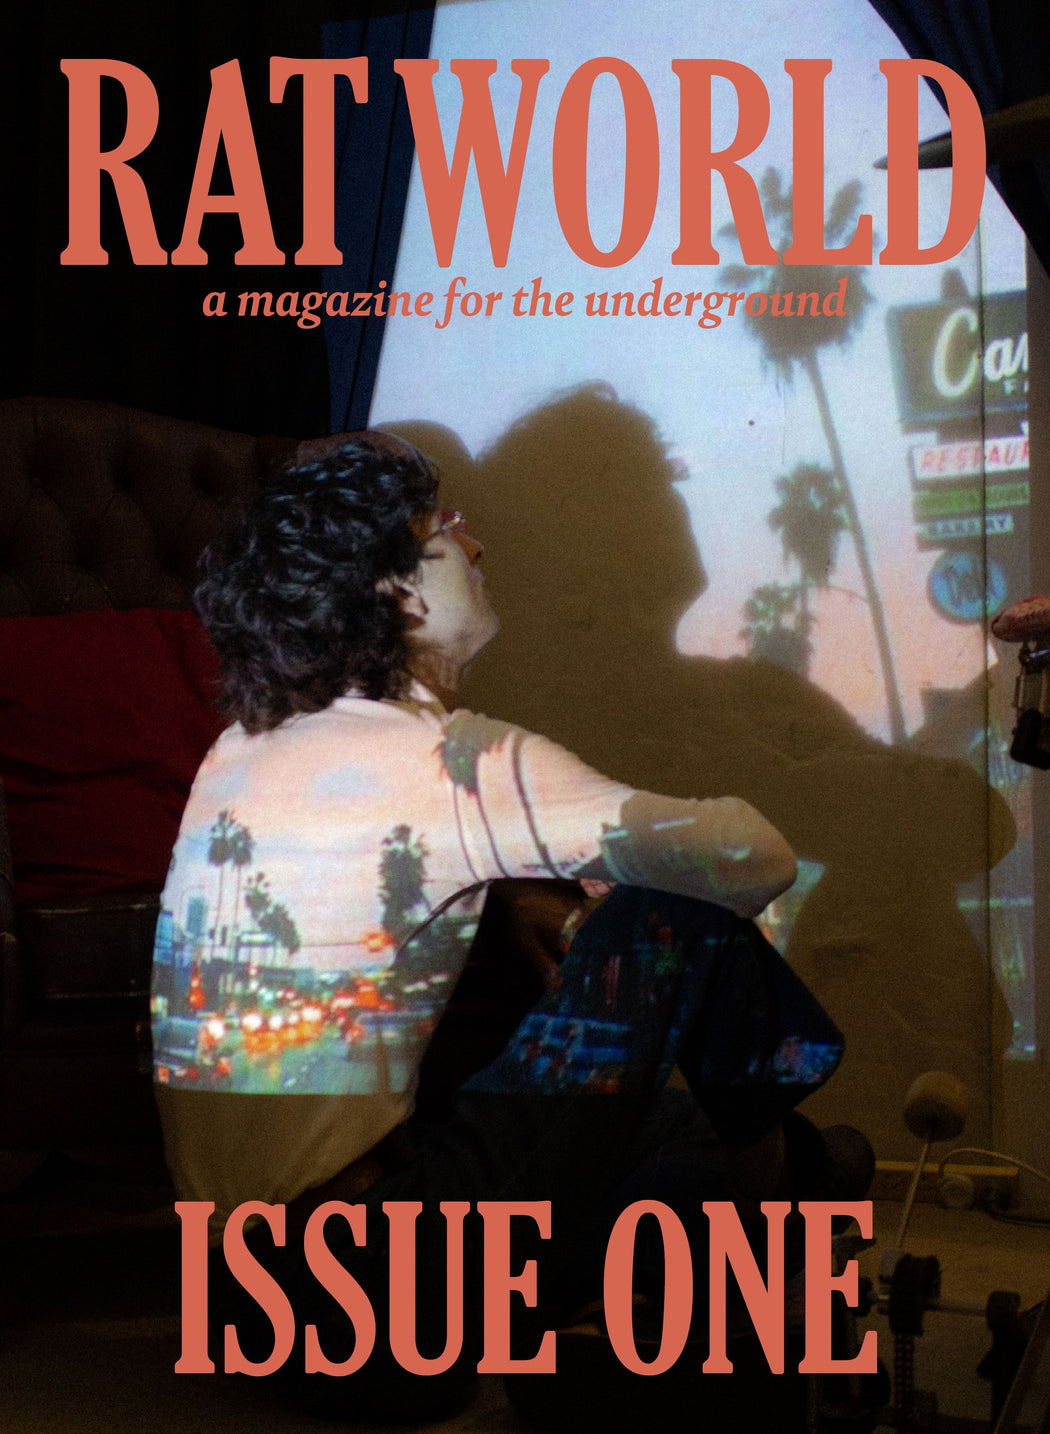 Rat World Issue One